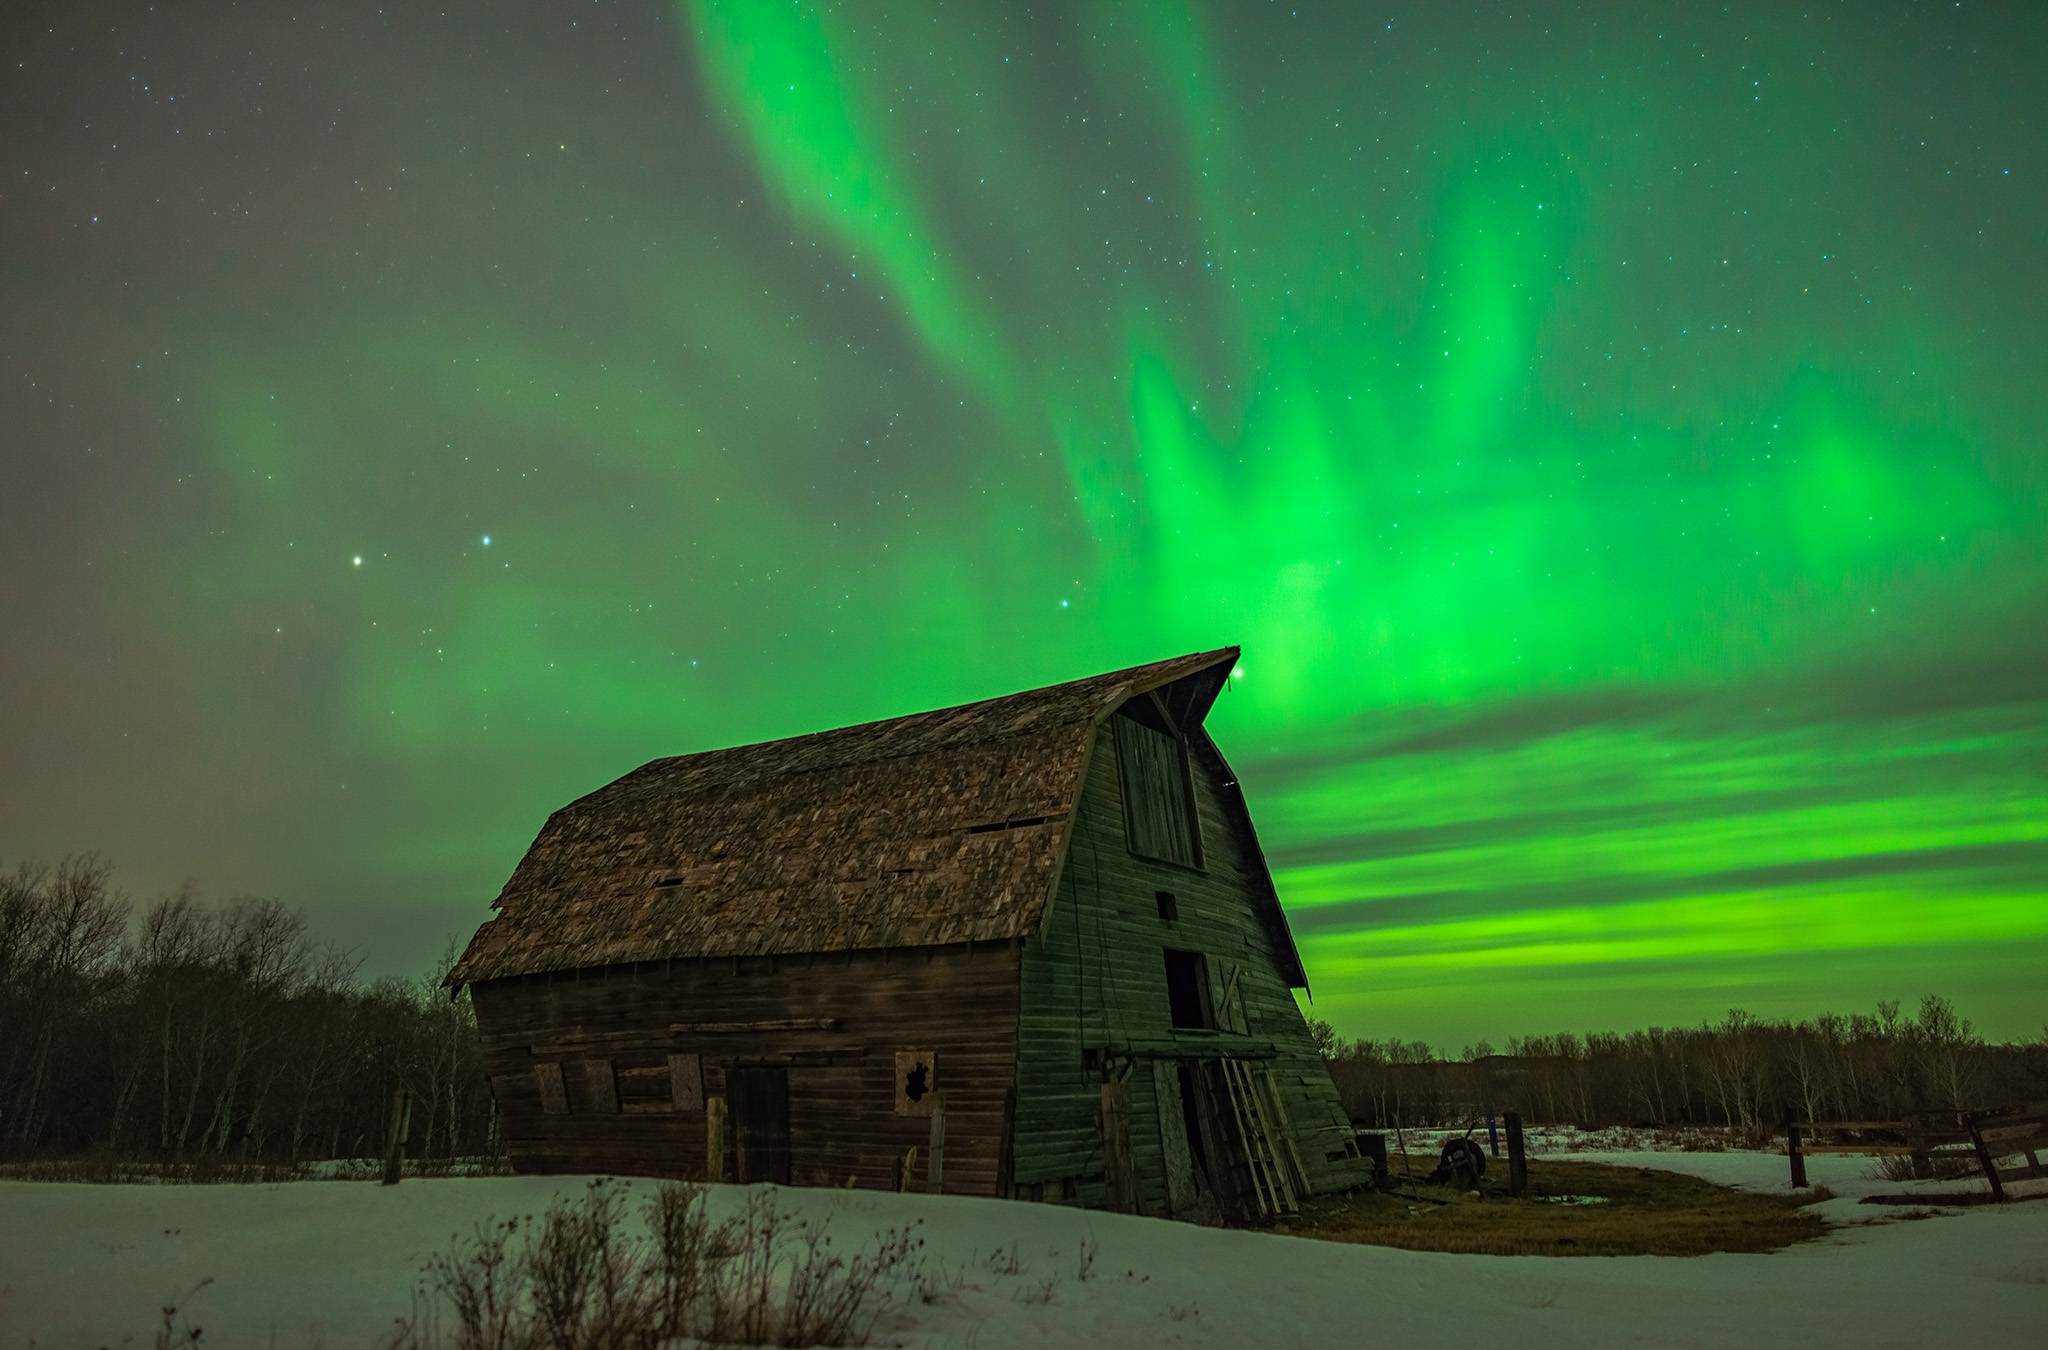 Aurora Borealis fires in the Saskatchewan night sky over an abandoned barn